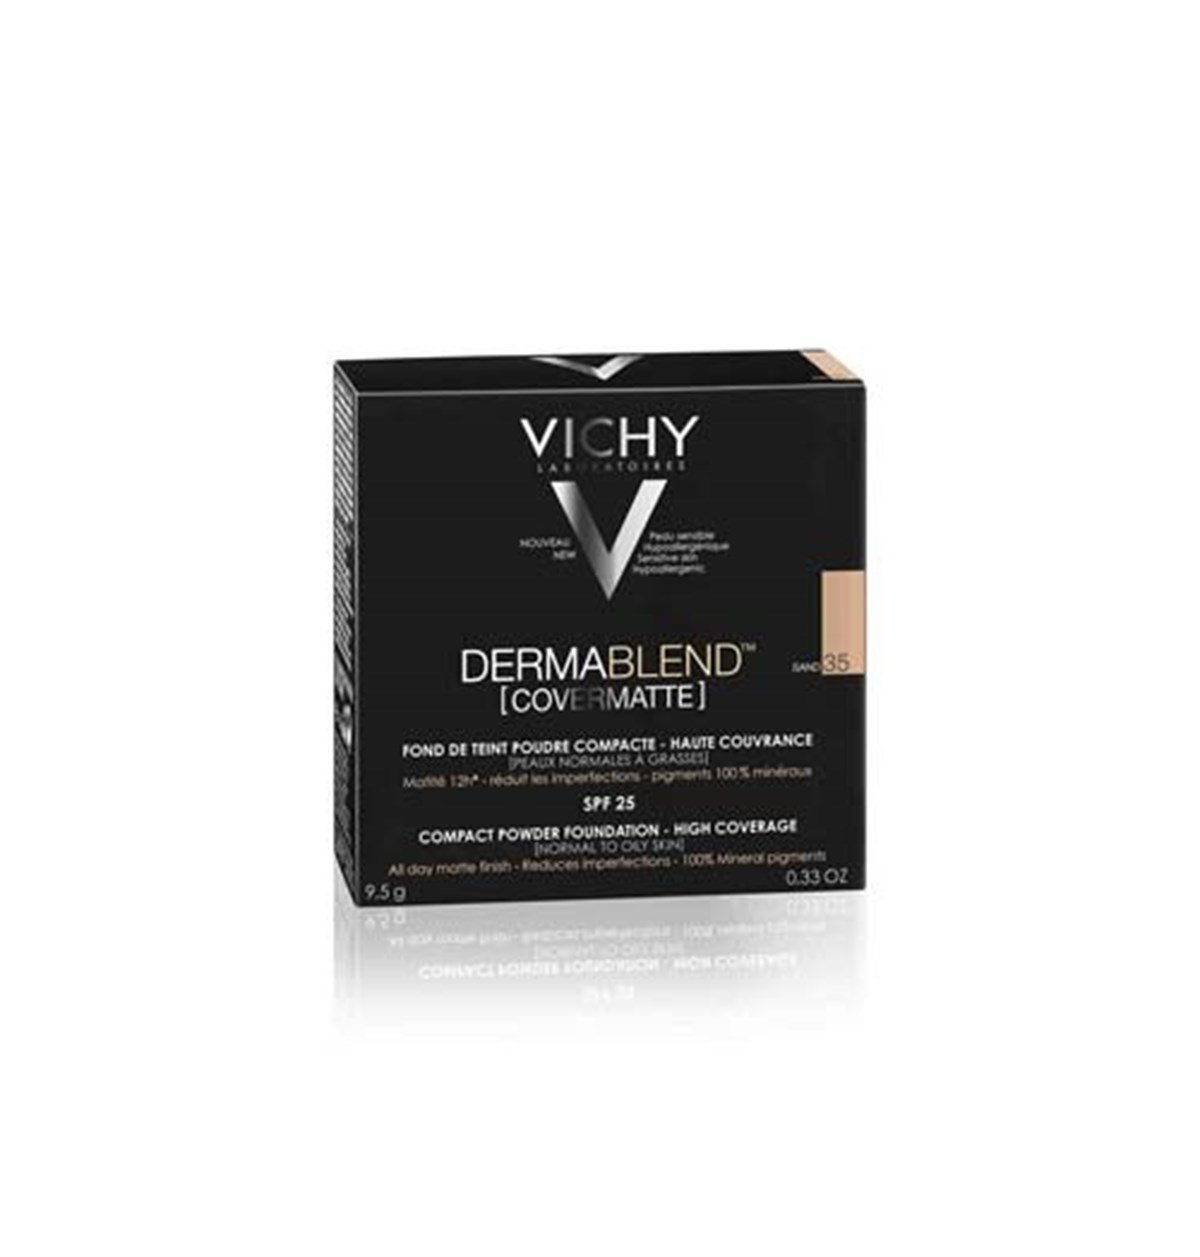 Vichy Dermablend Mineral Kompakt Toz Fondöten Spf25 Sand 35 | Dermolist.com  da !